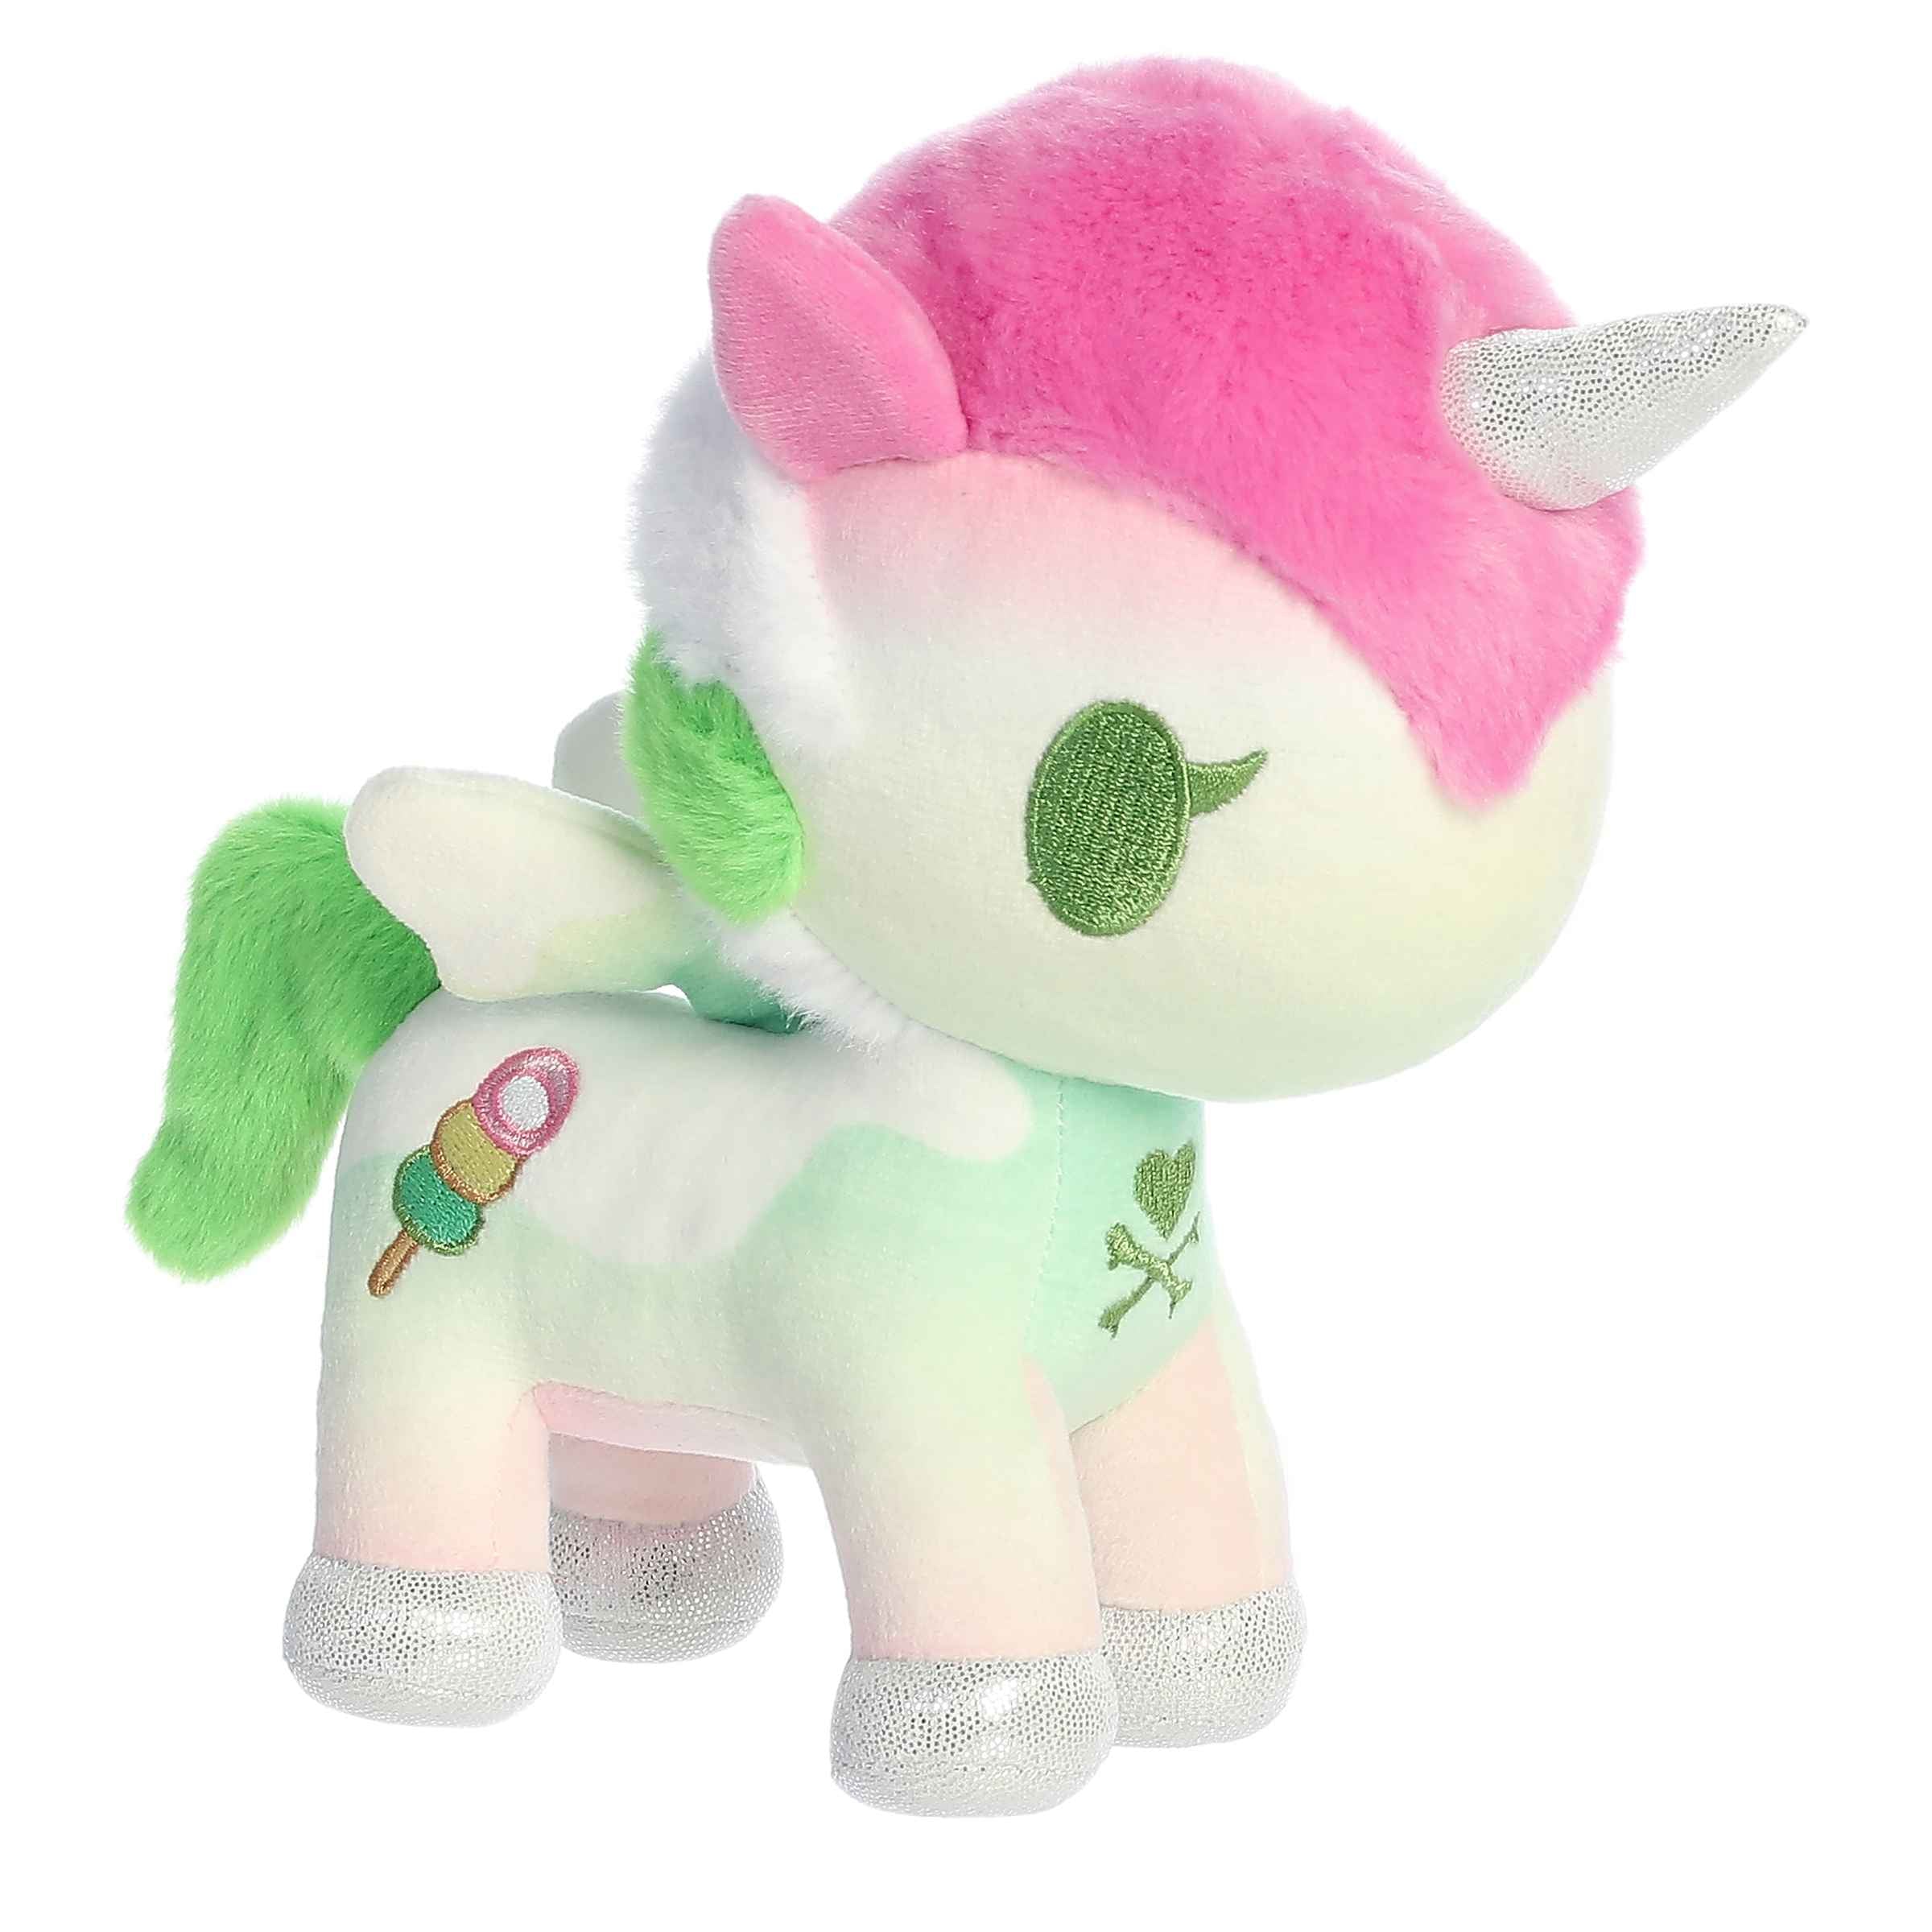 Mochi Ice Cream Unicorno plush from tokidoki by Aurora, green and pink unicorn, with ice cream mark, adorable and soft